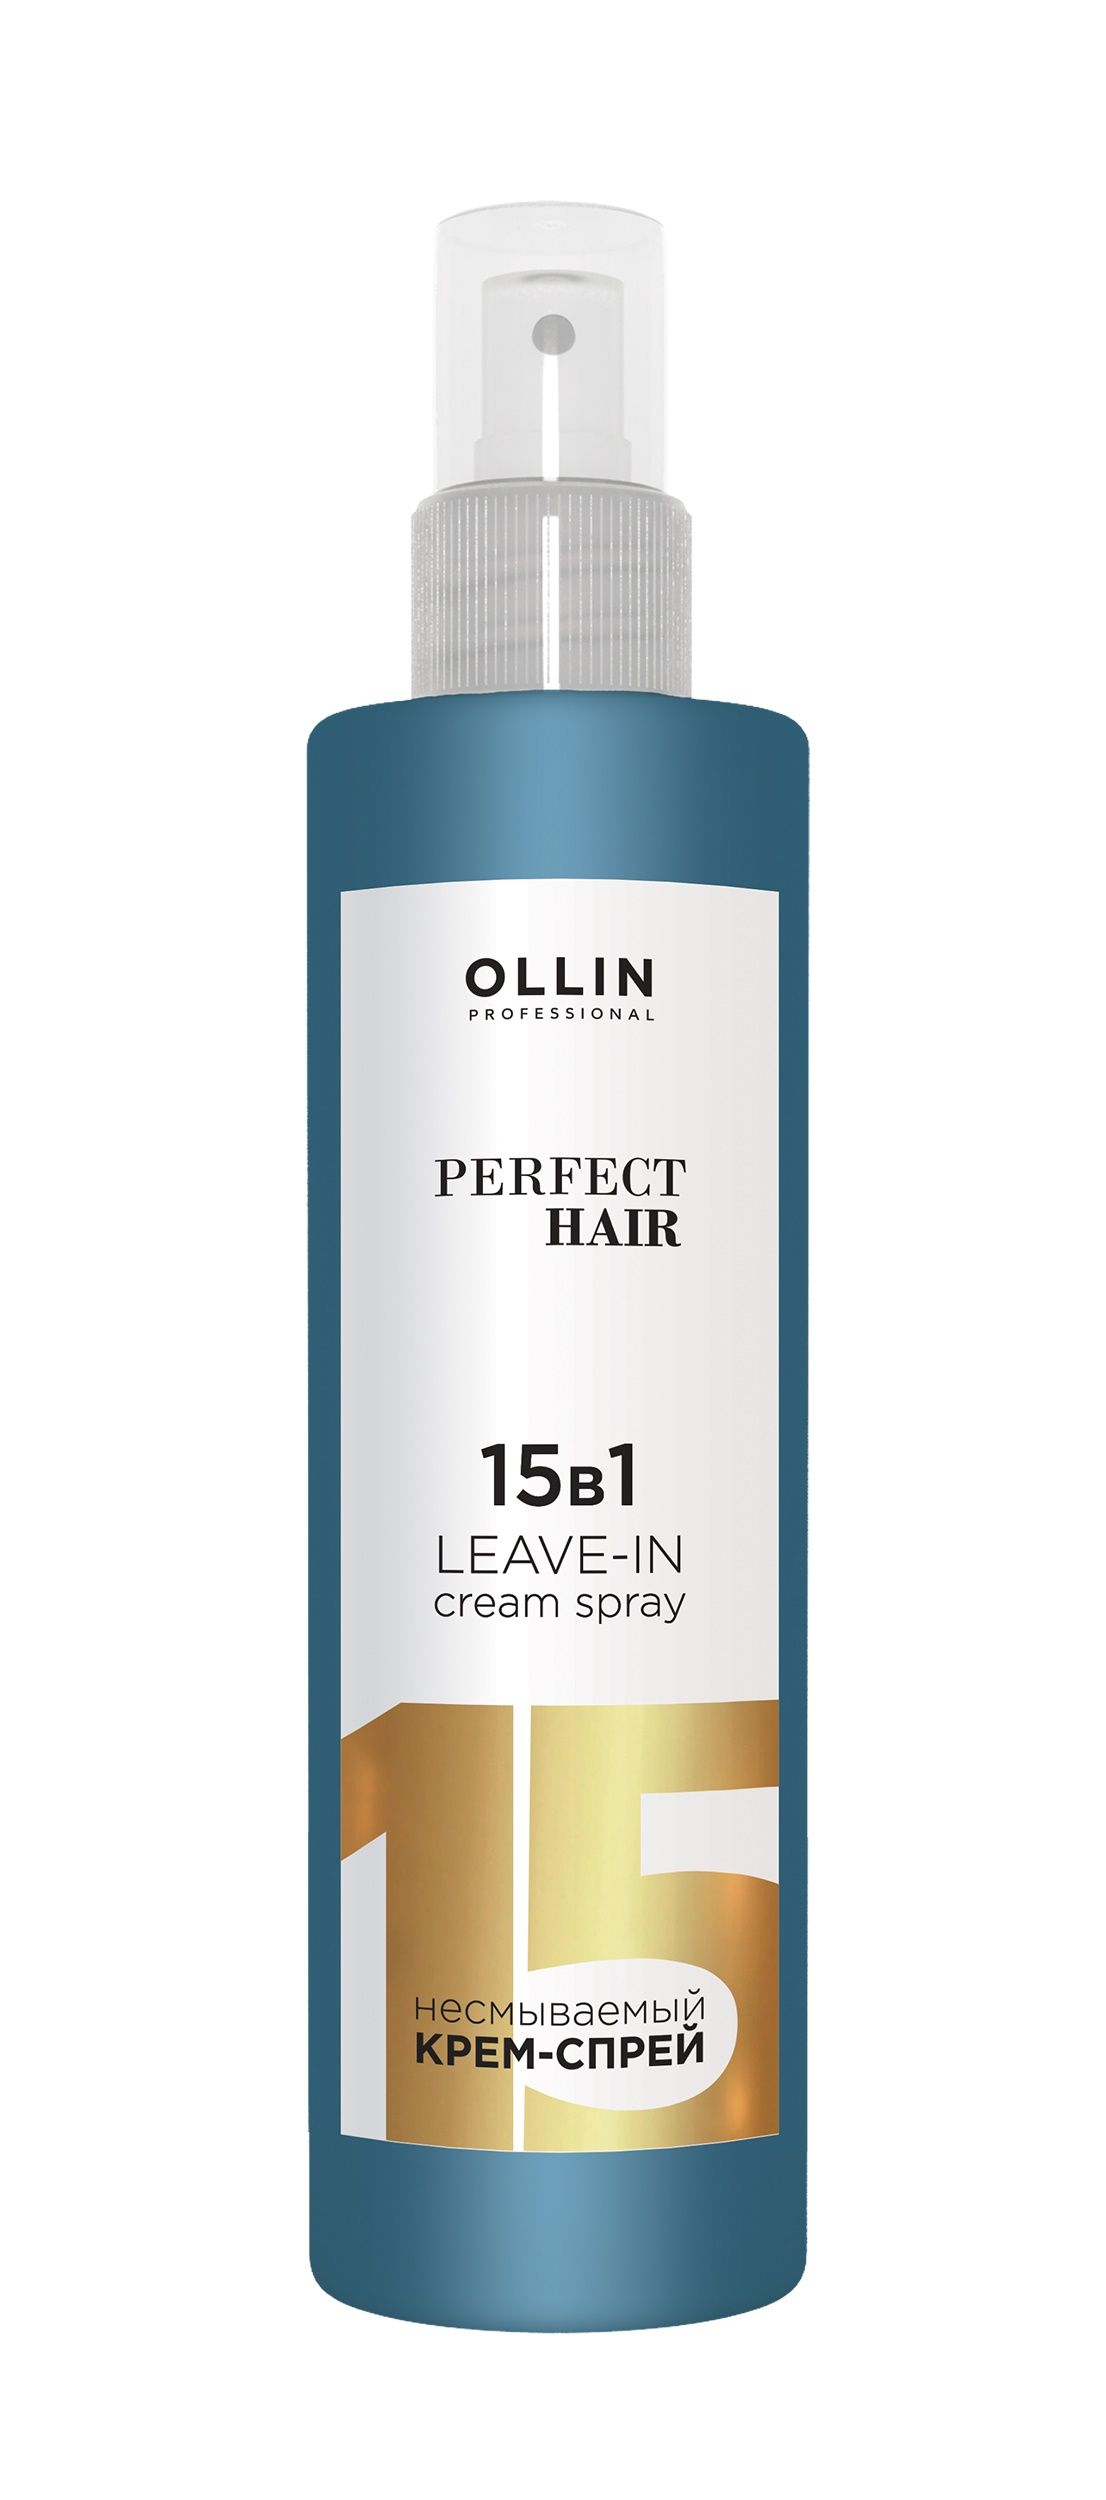 Ollin, Несмываемый крем-спрей 15 в 1 серии «Perfect Hair», Фото интернет-магазин Премиум-Косметика.РФ